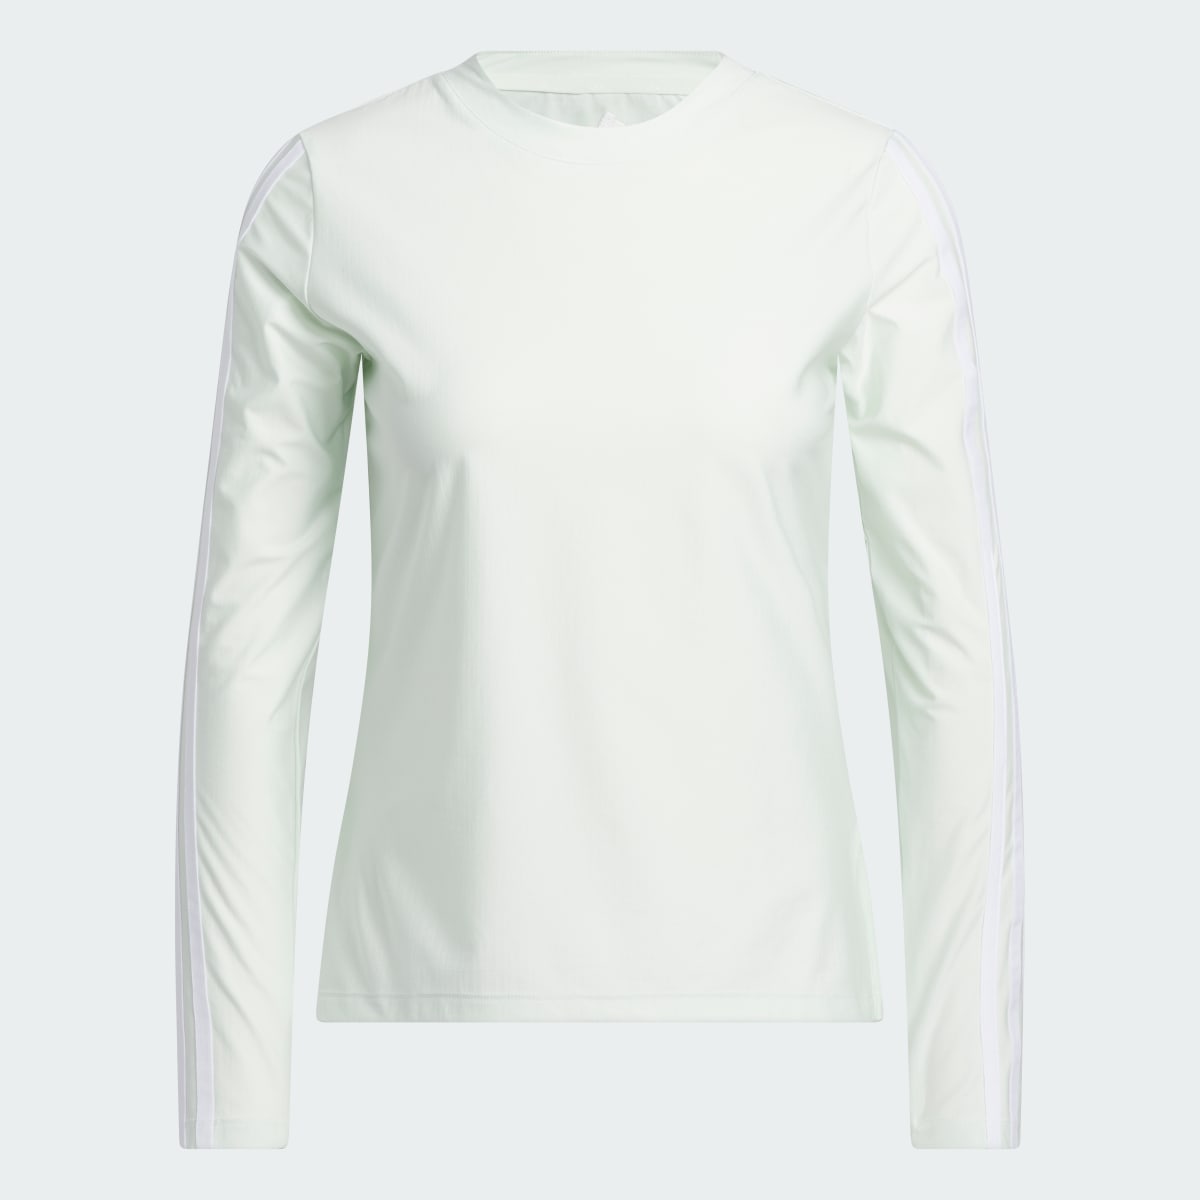 Adidas Ultimate365 TWISTKNIT Long Sleeve Shirt. 5